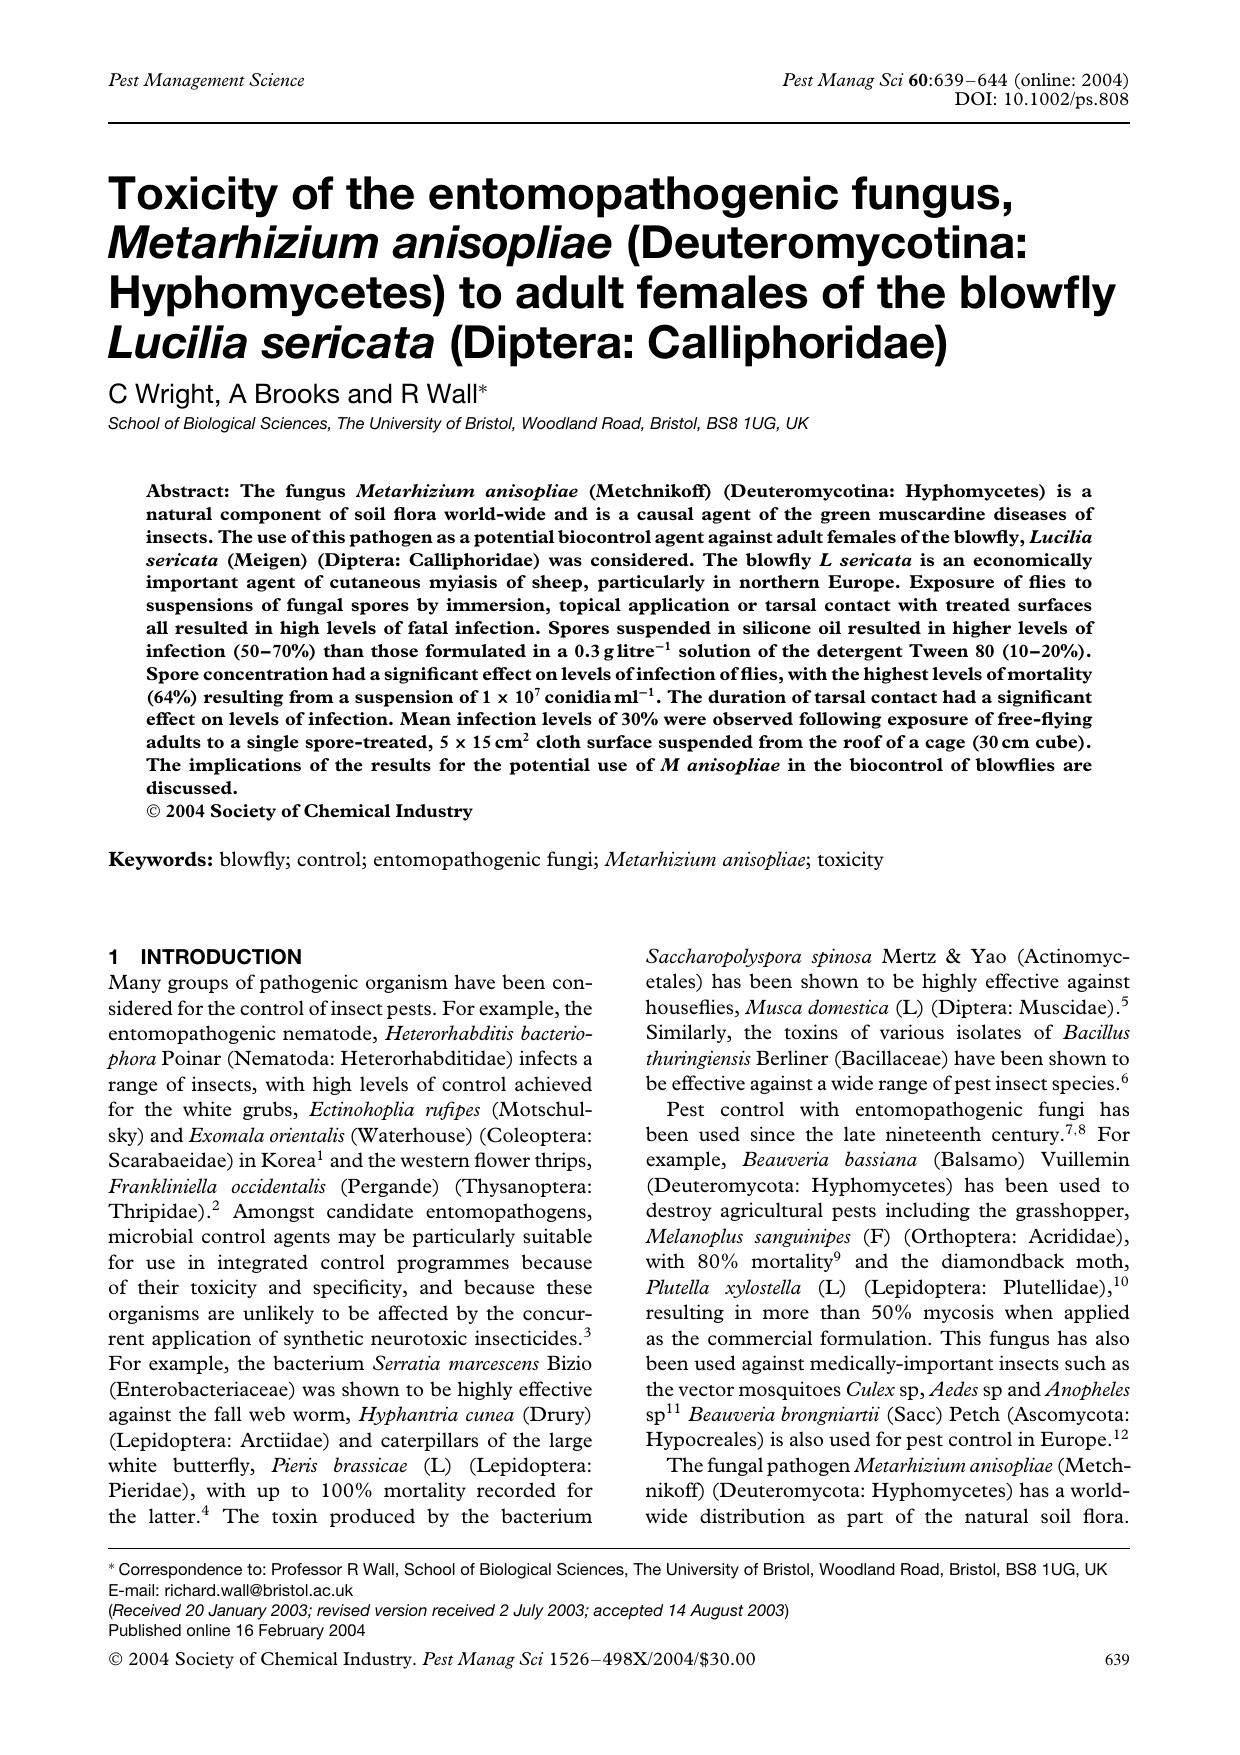 Toxicity of the entomopathogenic fungus, Metarhizium anisopliae (Deuteromycotina: Hyphomycetes) to adult females of the blowfly Lucilia sericata (Diptera: Calliphoridae) by Unknown